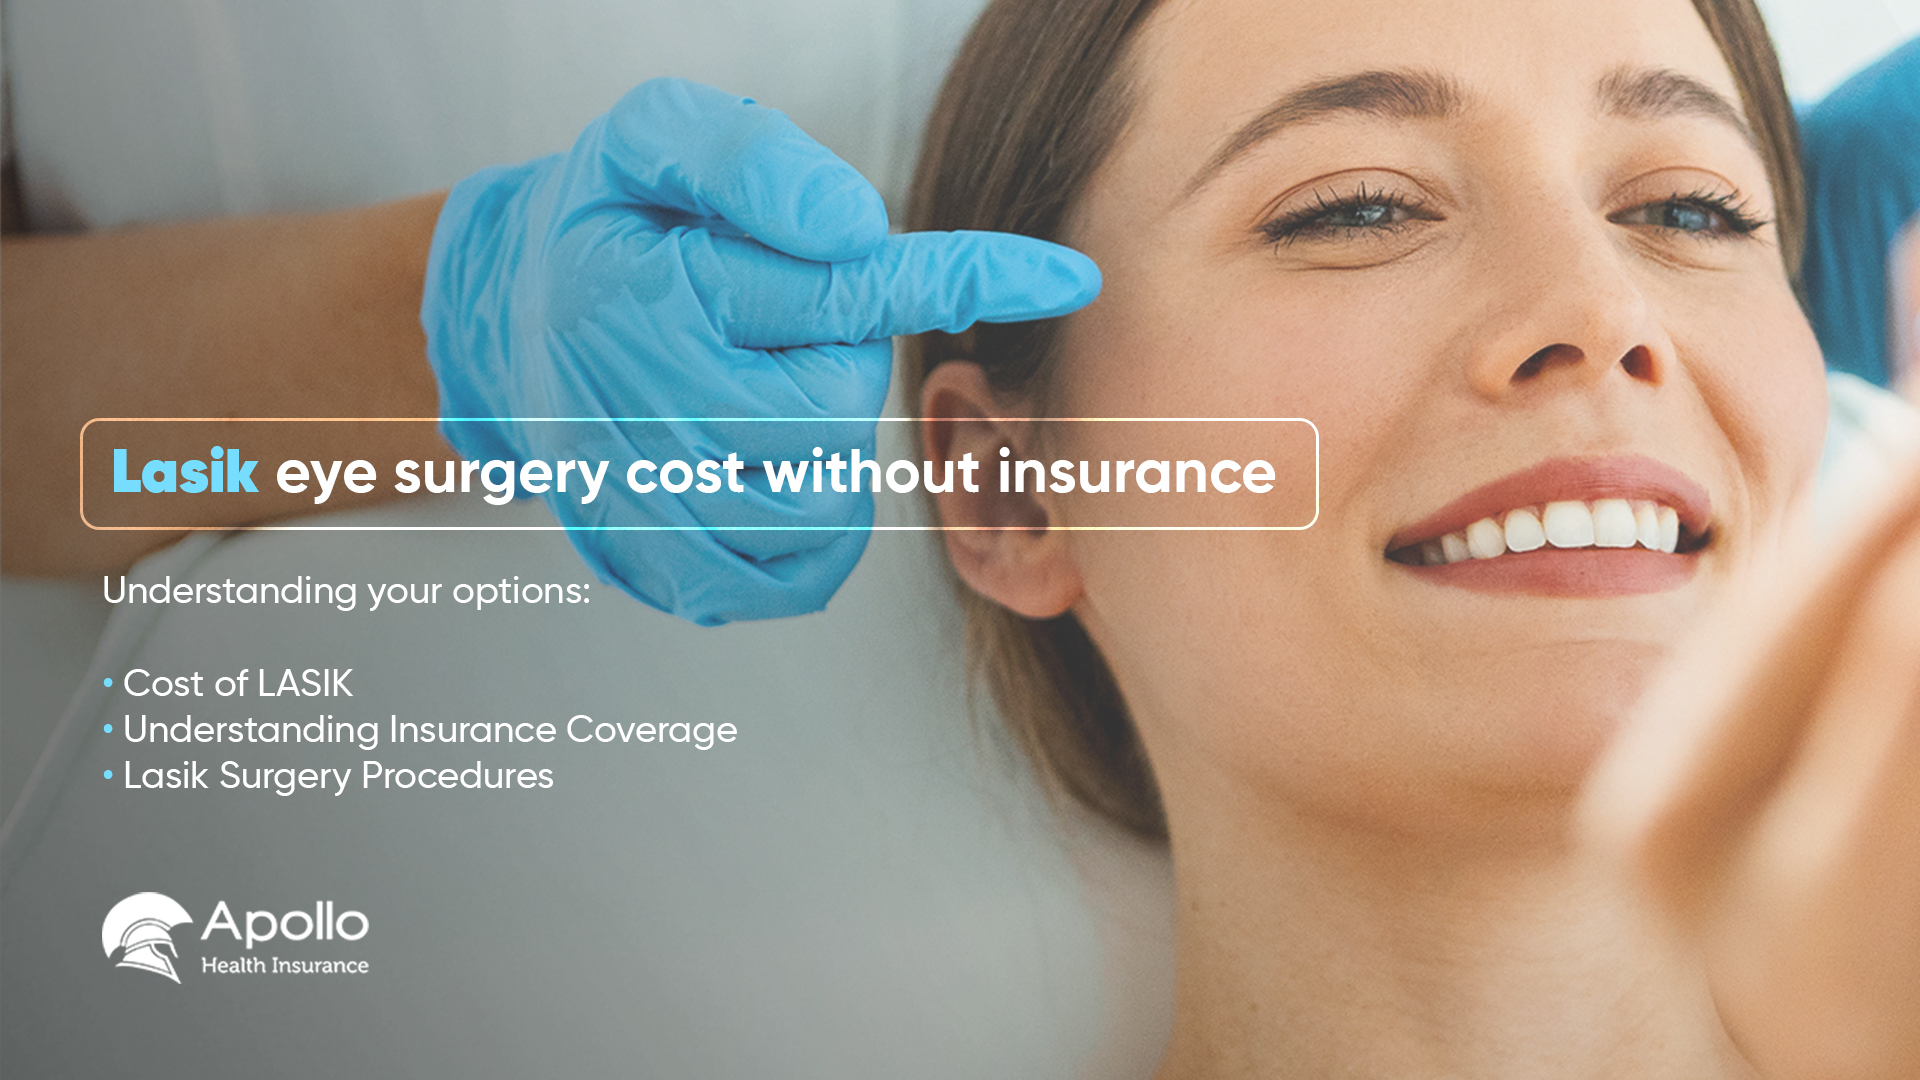 Lasik eye surgery cost without insurance